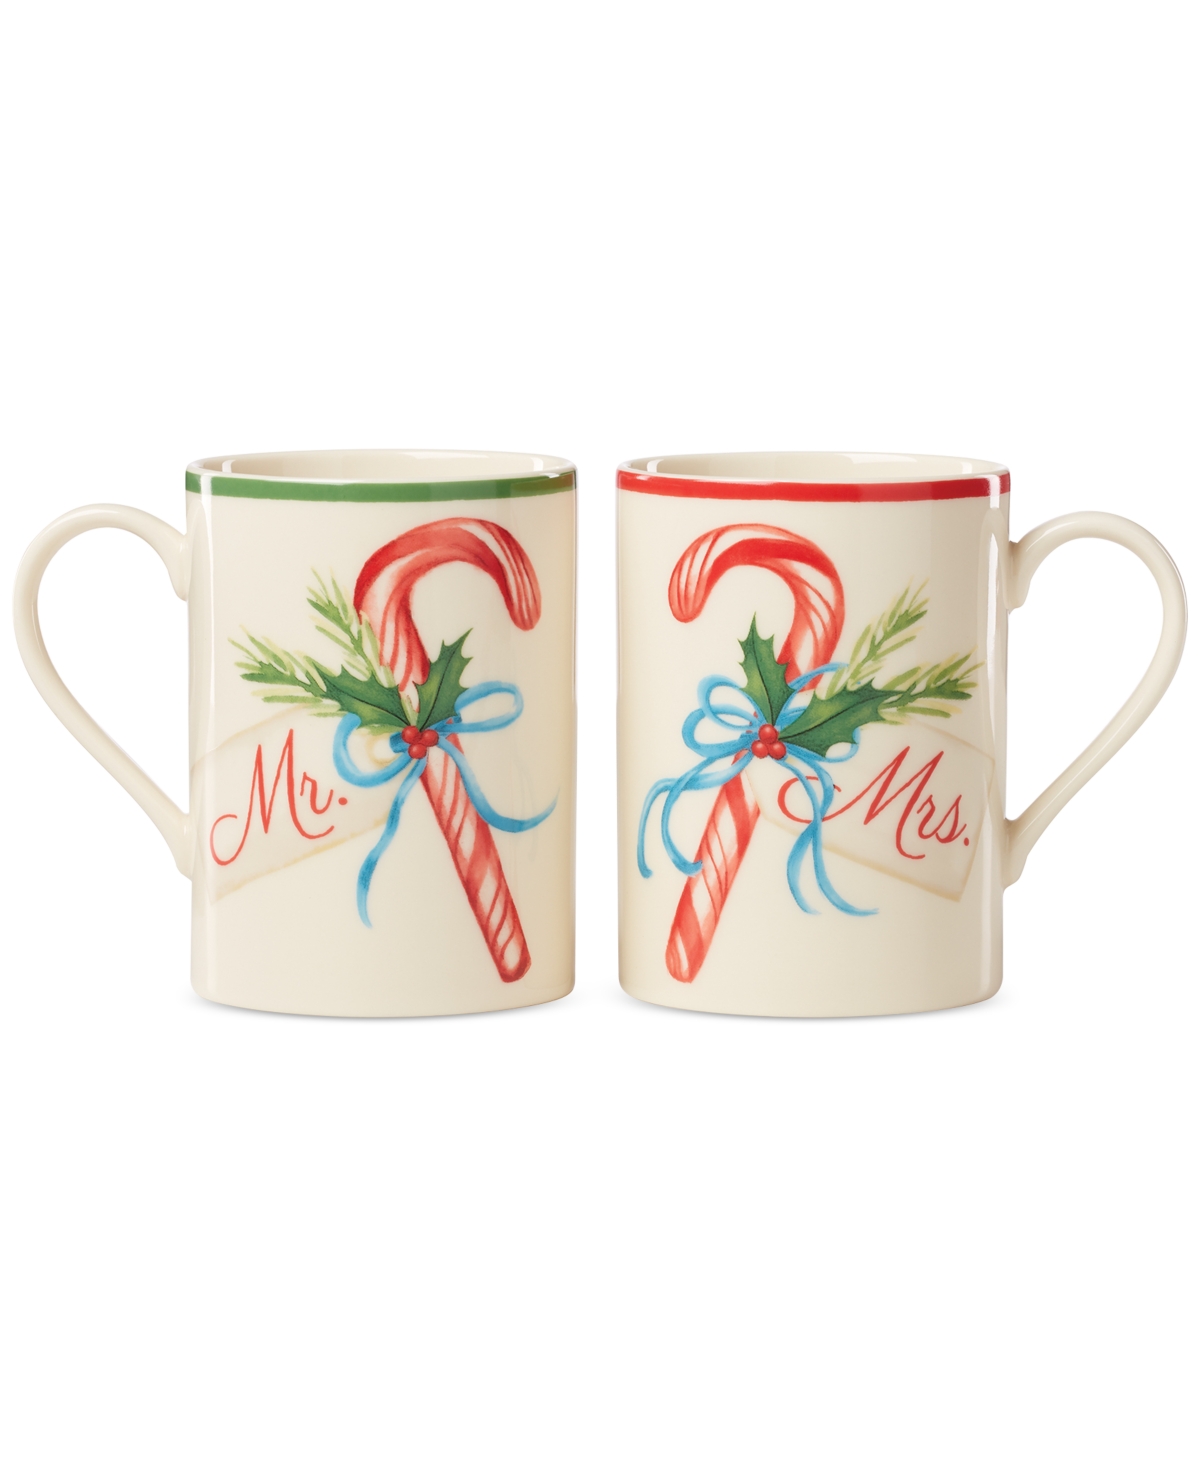 Lenox Mr & Mrs 2-piece Porcelain Candy Cane Mug Set In Multi And White